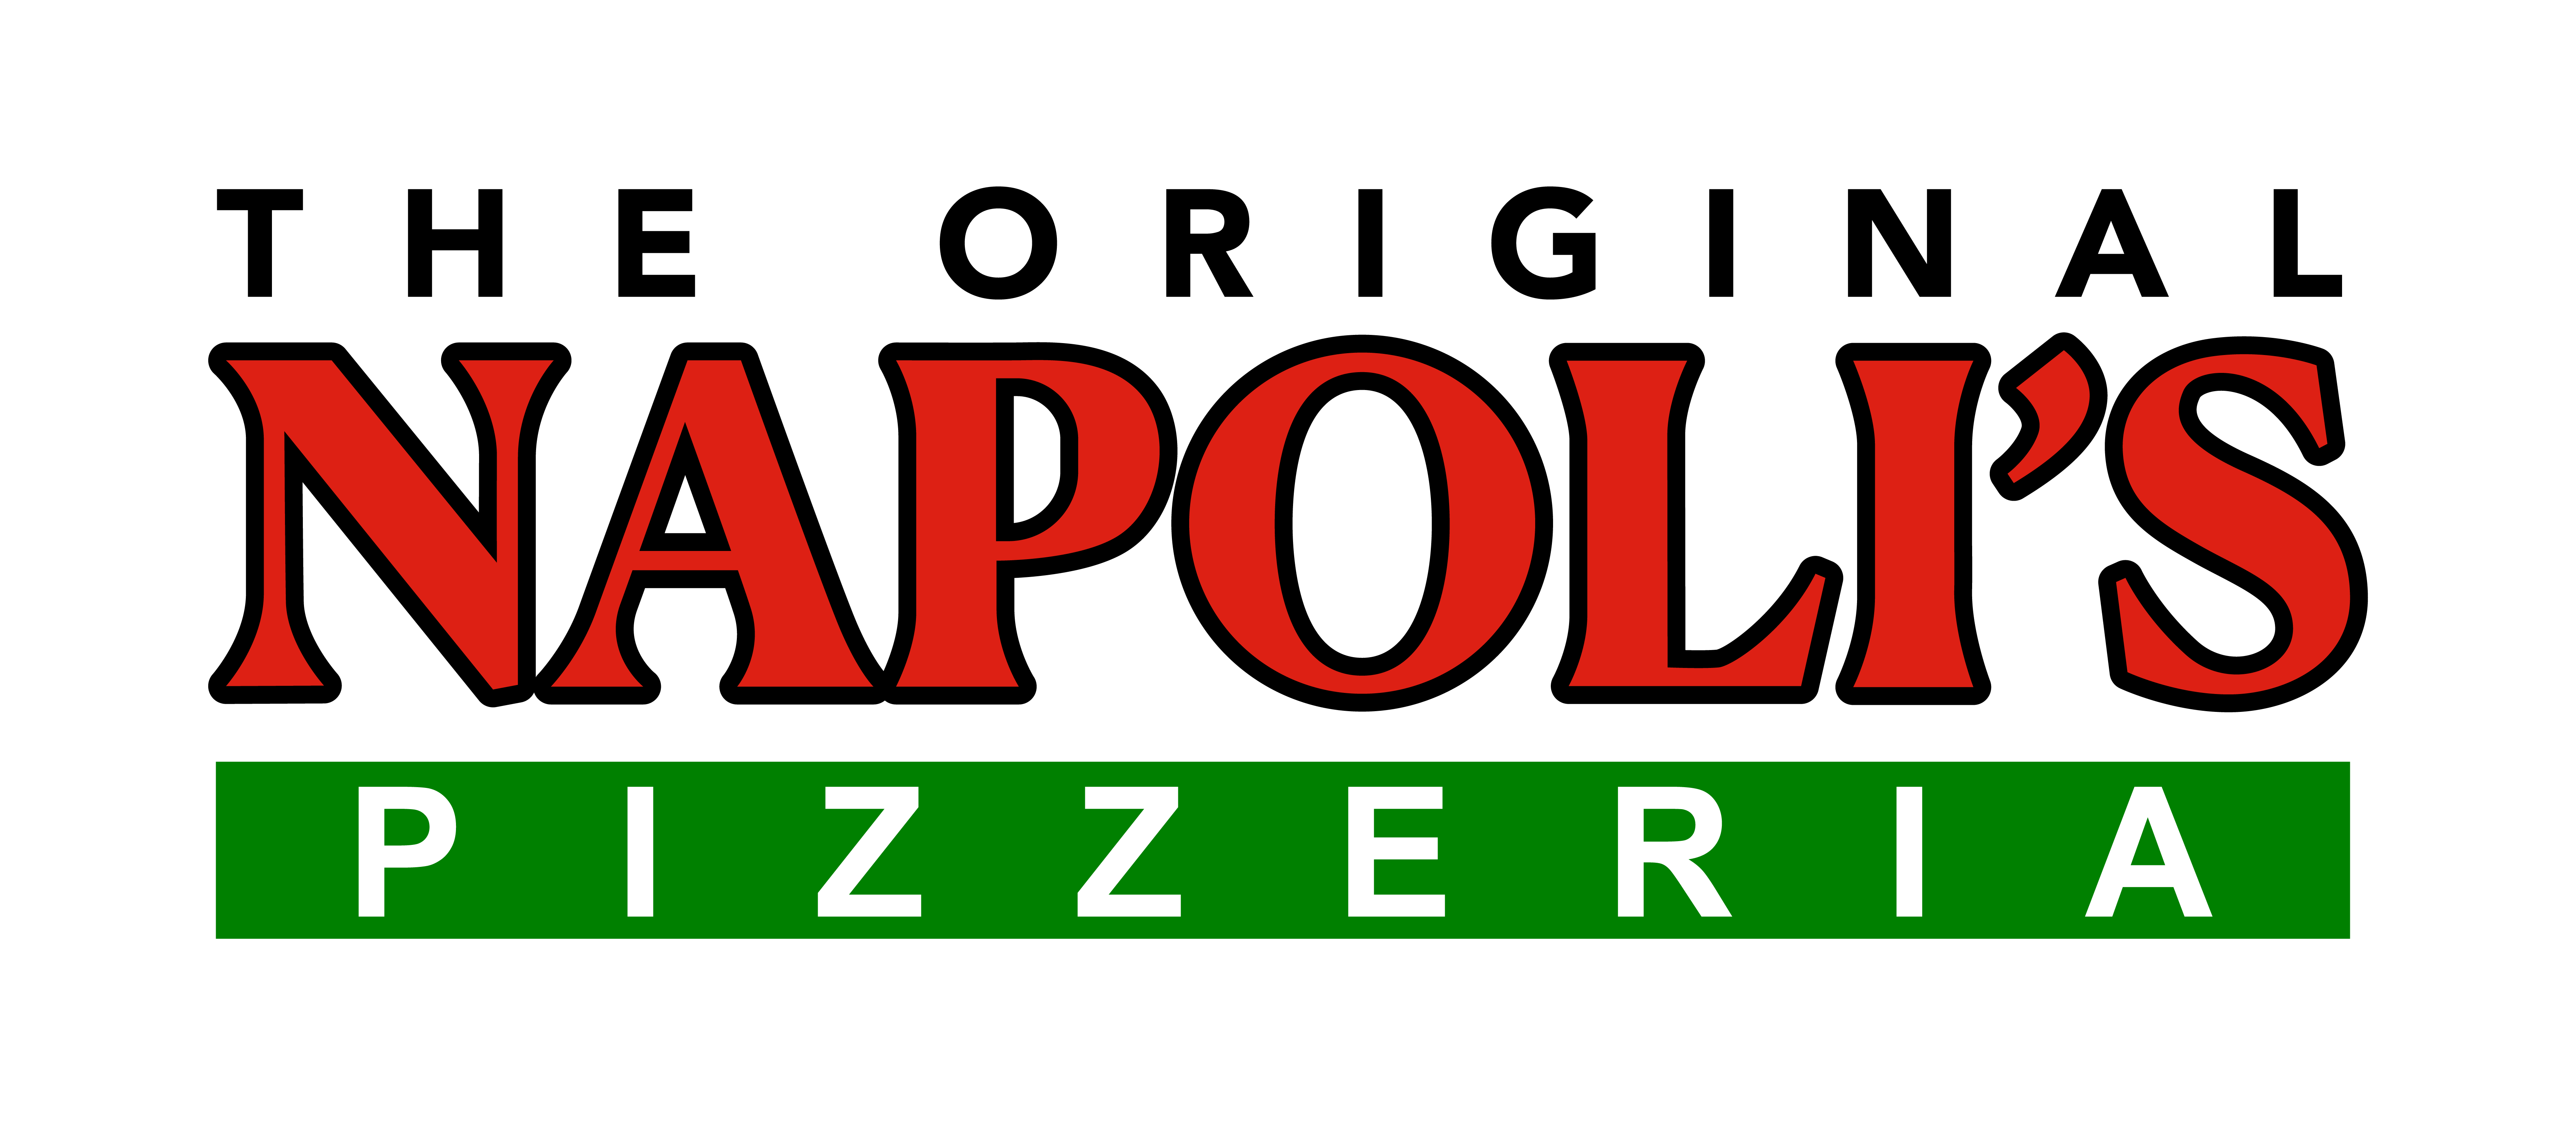 The Original Napoli's Pizzeria